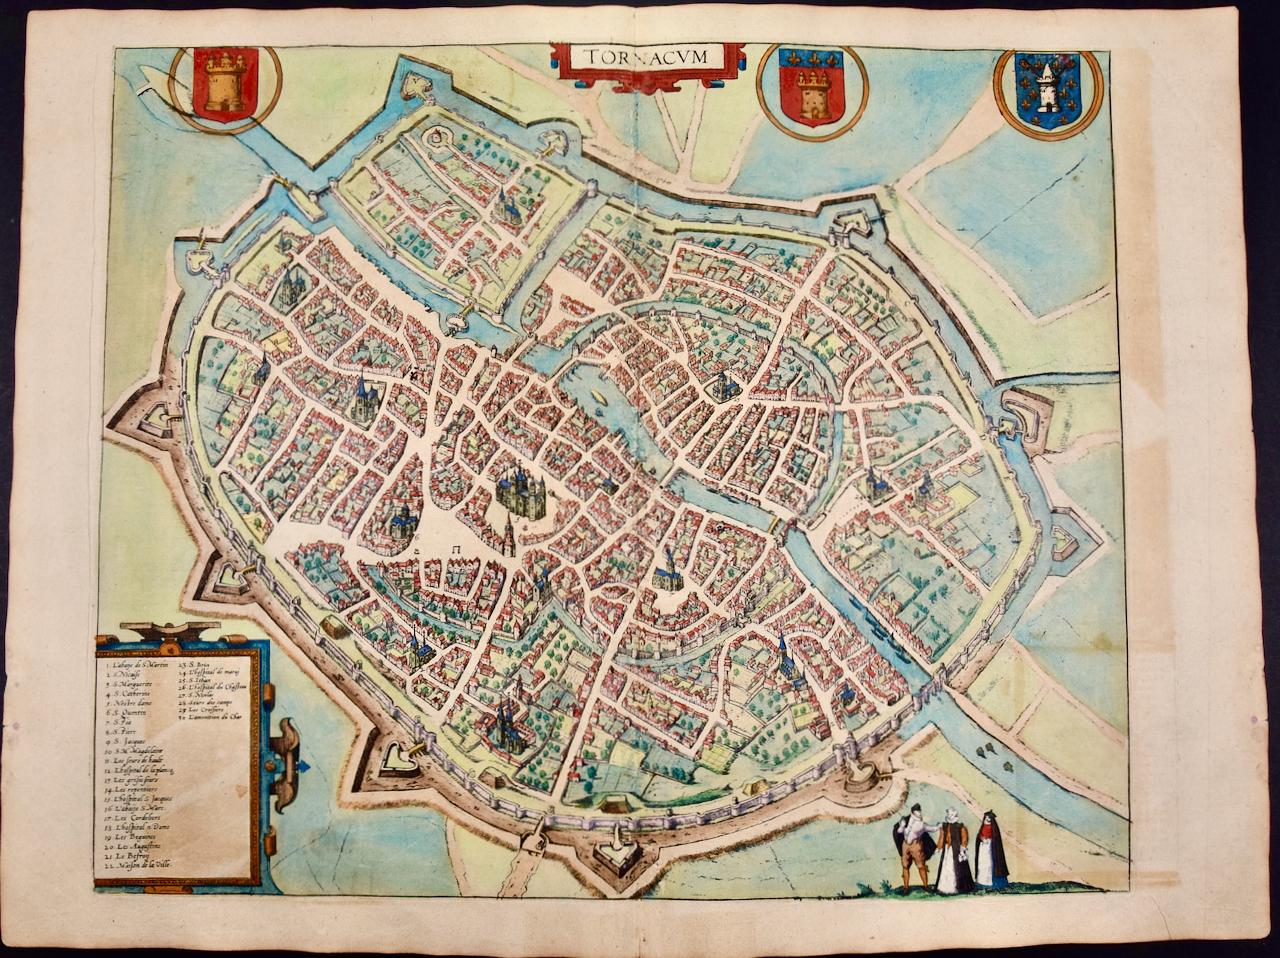 Tournai (Tournay), Belgium: A 16th Century Hand-colored Map by Braun & Hogenberg